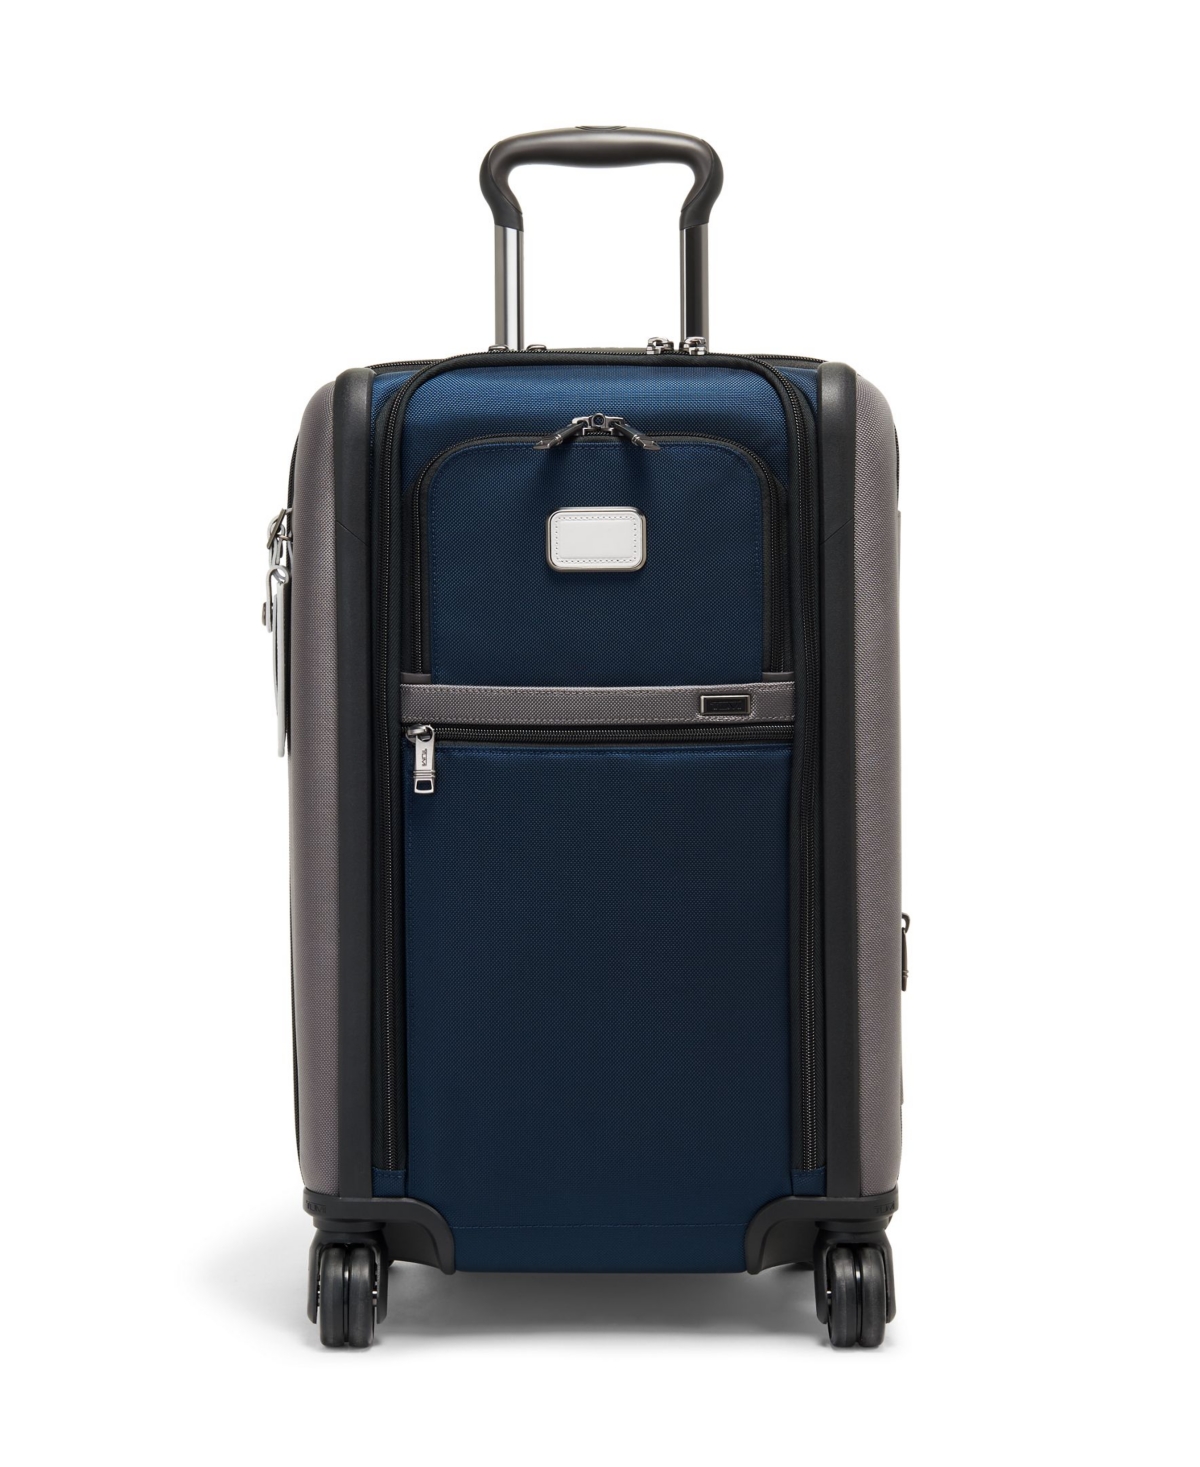 TUMI - International Dual Access 4 Wheeled Carry-On Suitcase - Navy/Grey